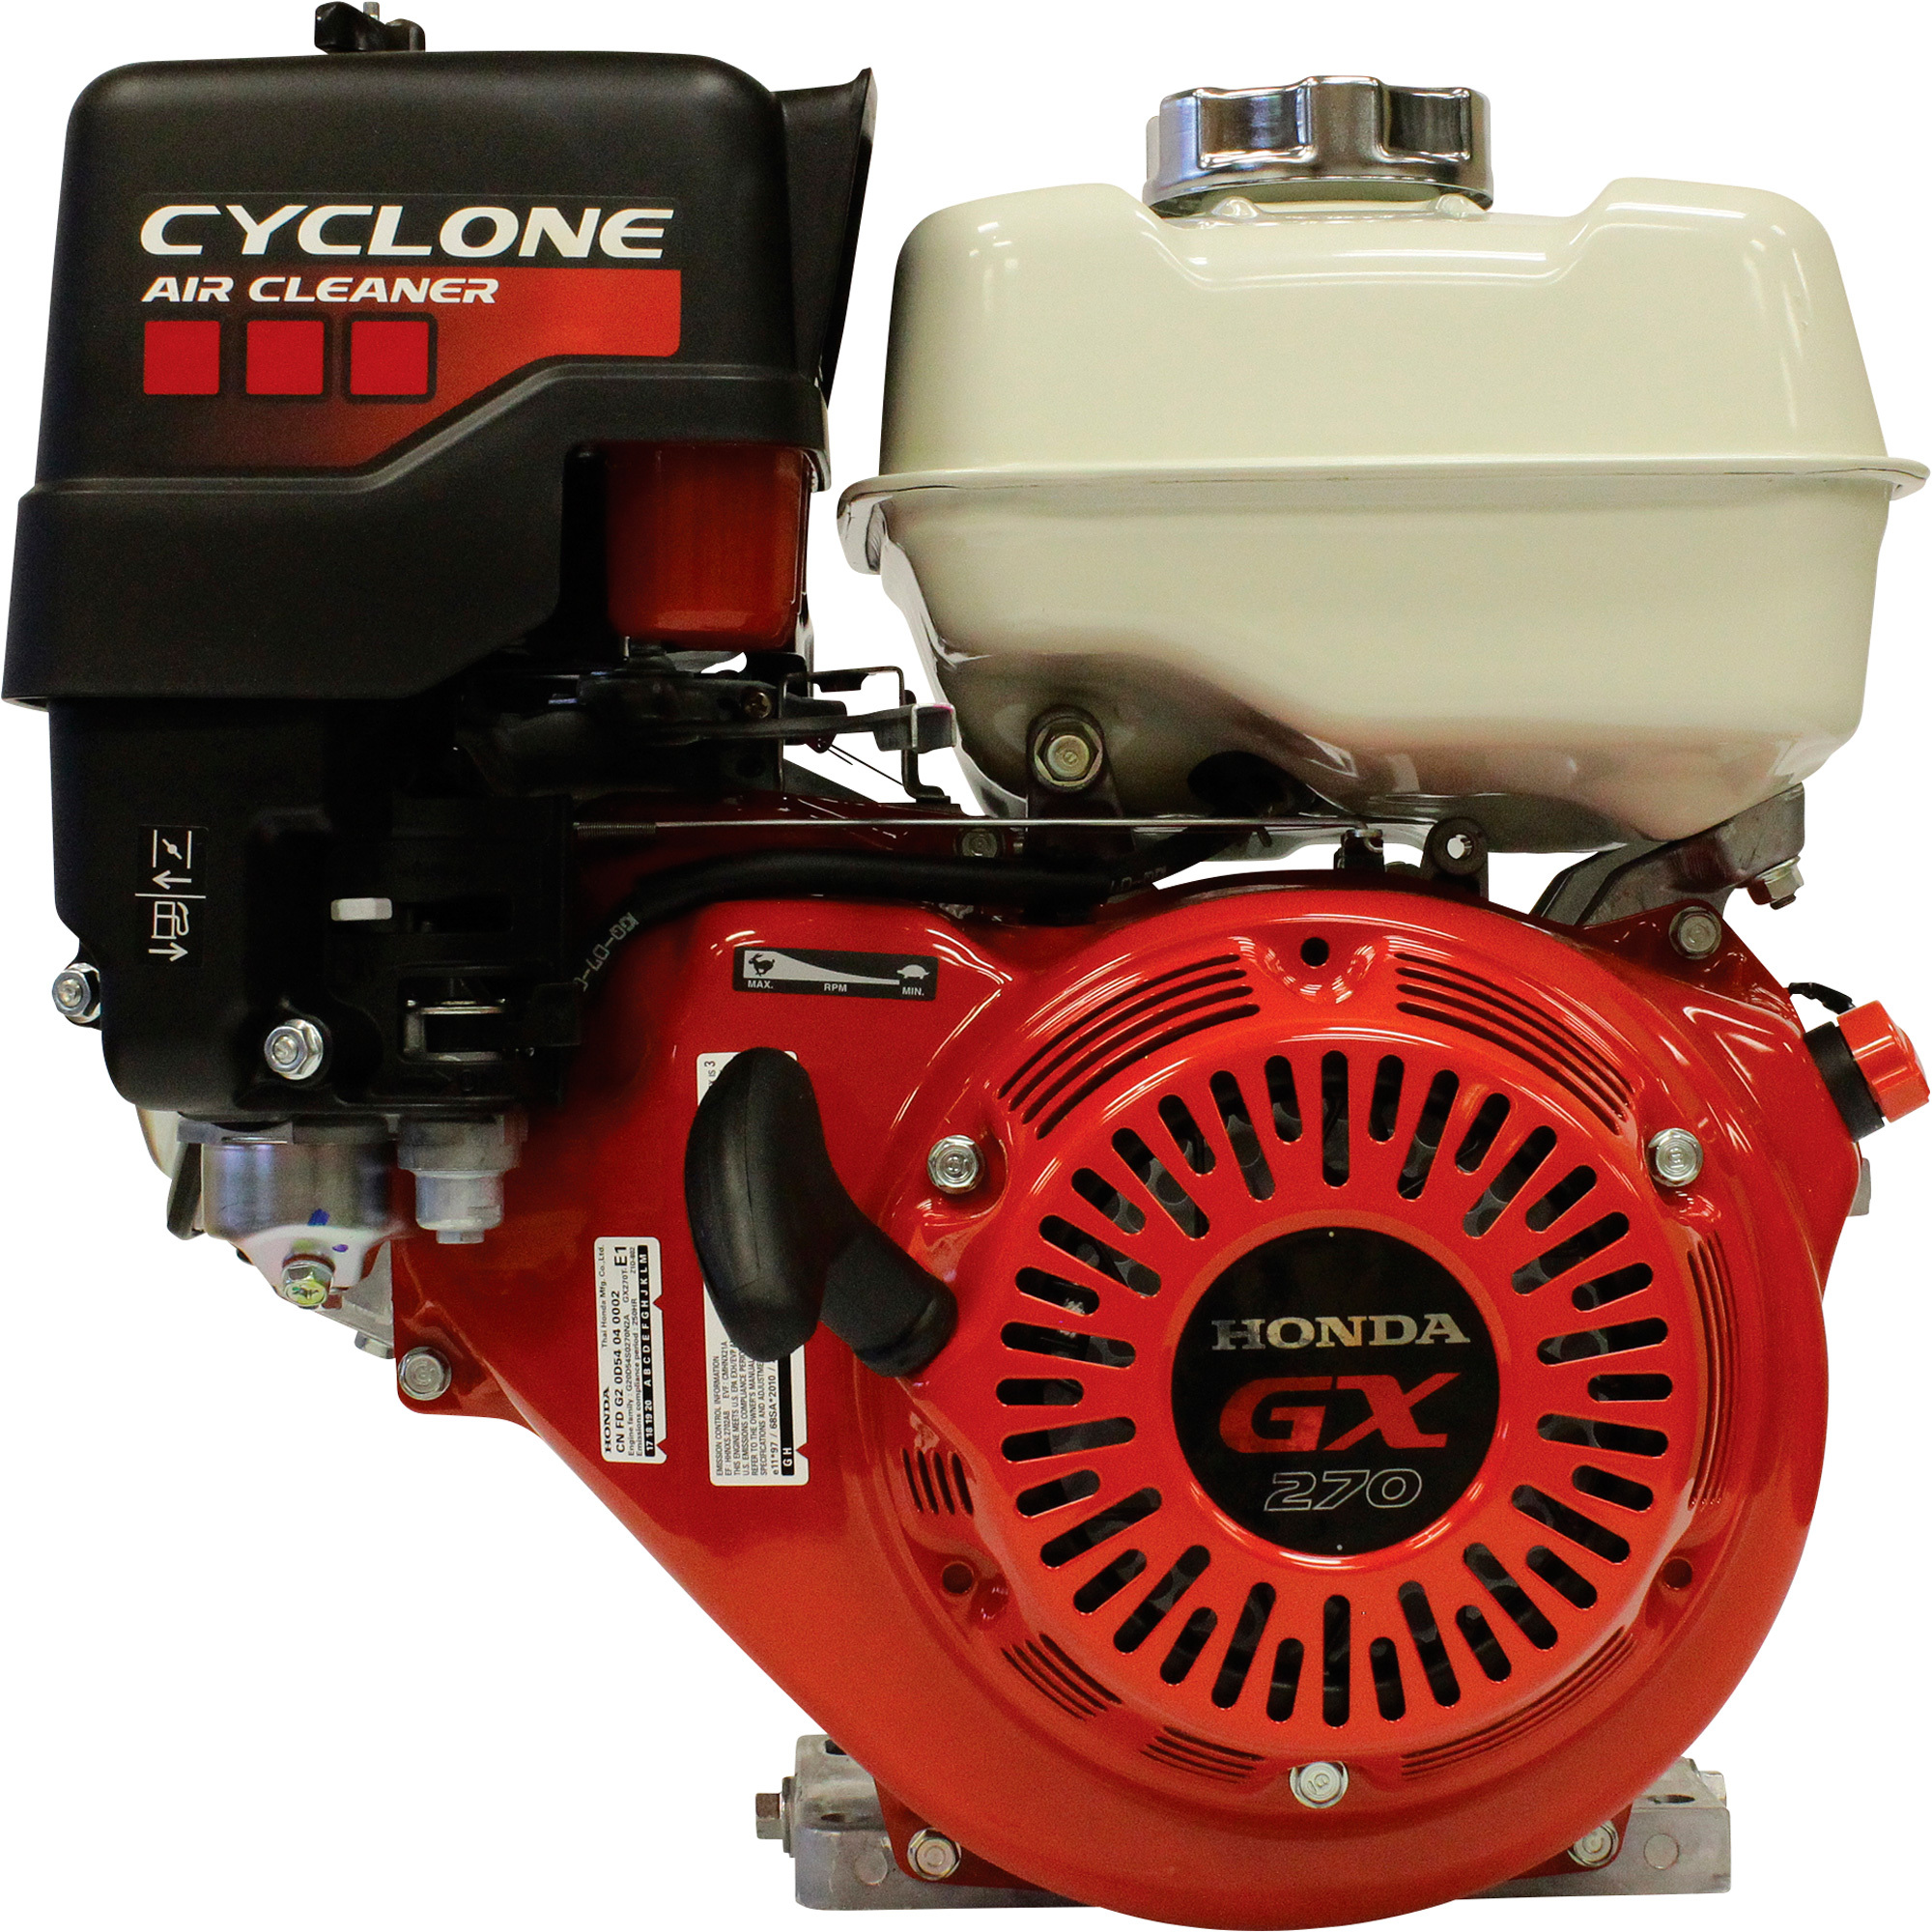 Honda Horizontal Engine with Cyclone Air Filter â 270cc, GX Series, 1Inch x 3 31/64Inch Shaft, Model GX270UT2QC9